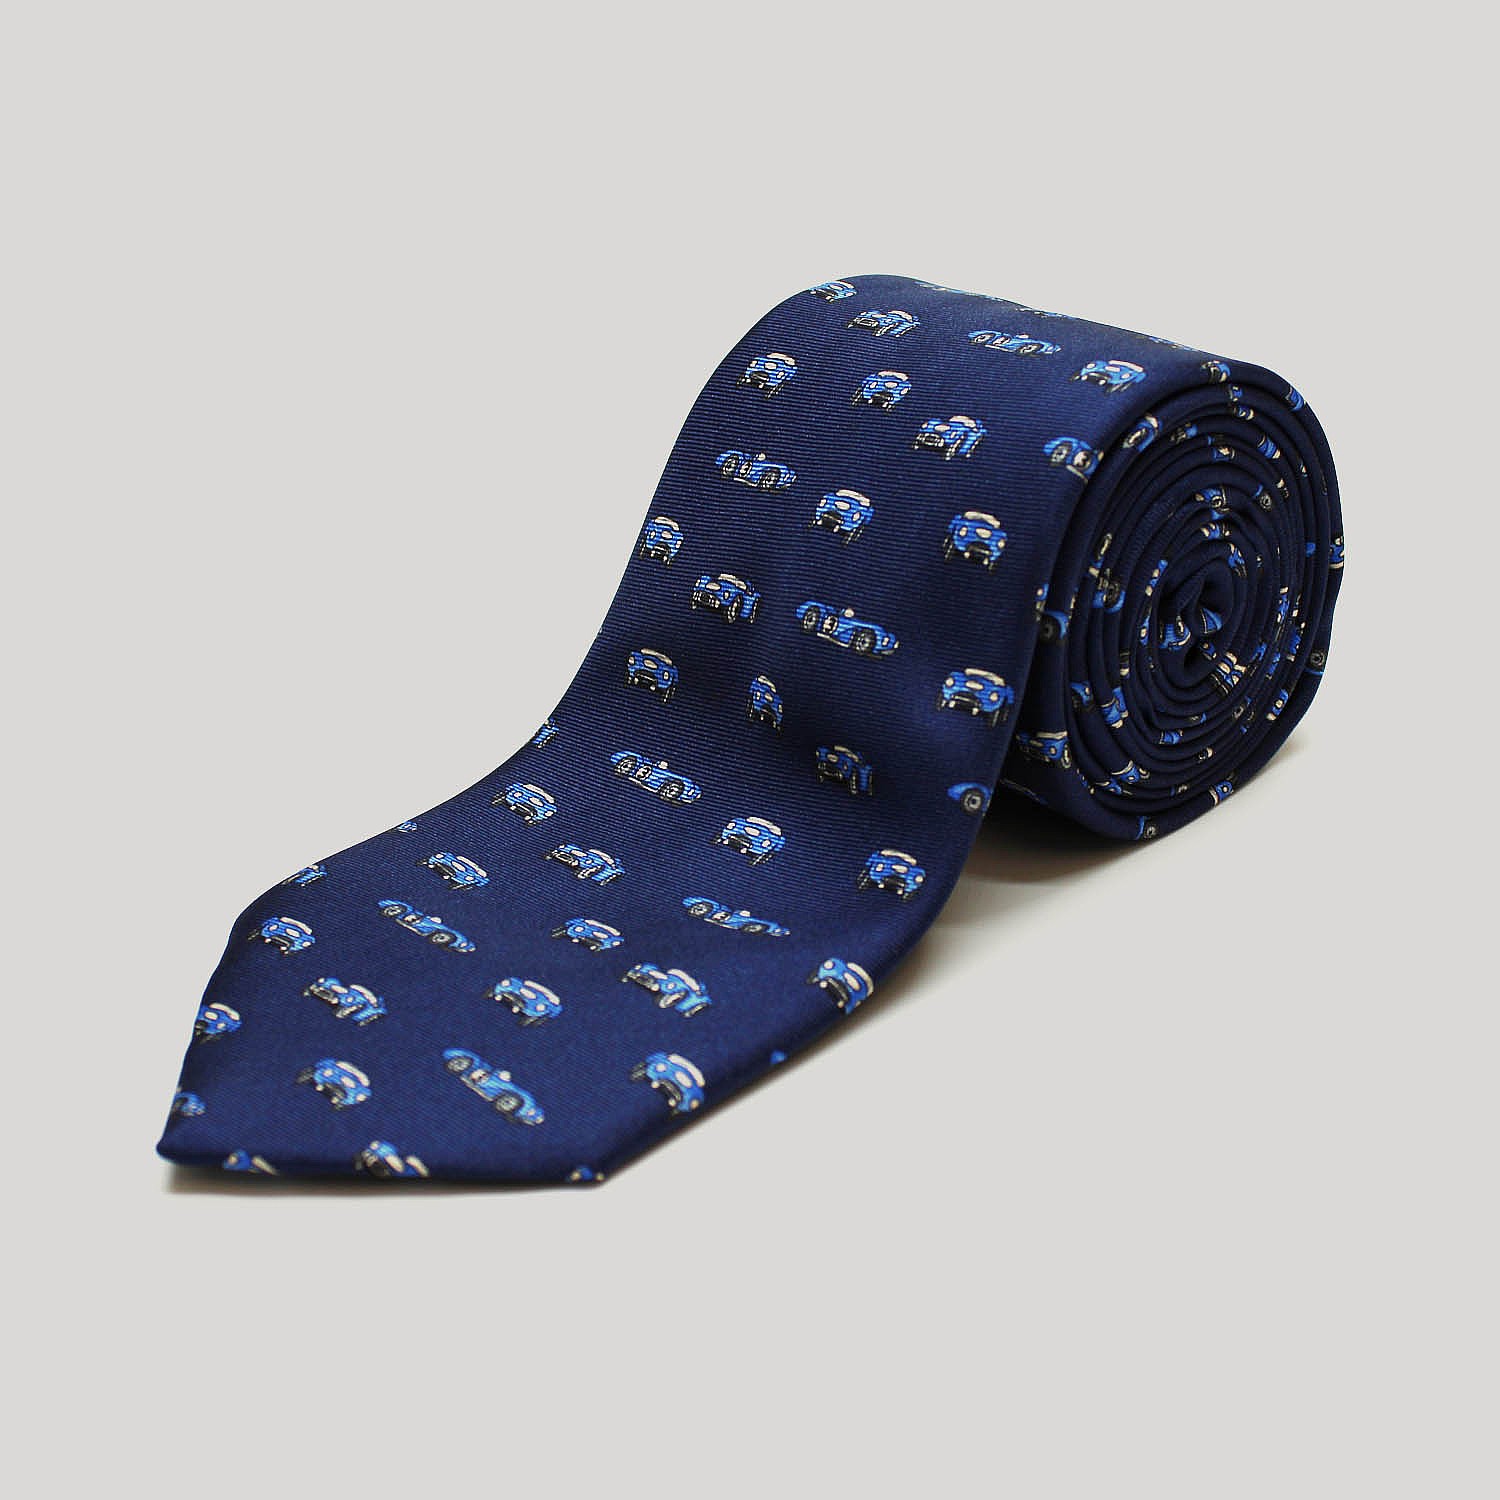 3-Fold Floral Patterned Printed Silk Tie - Brown/Navy/Light Blue